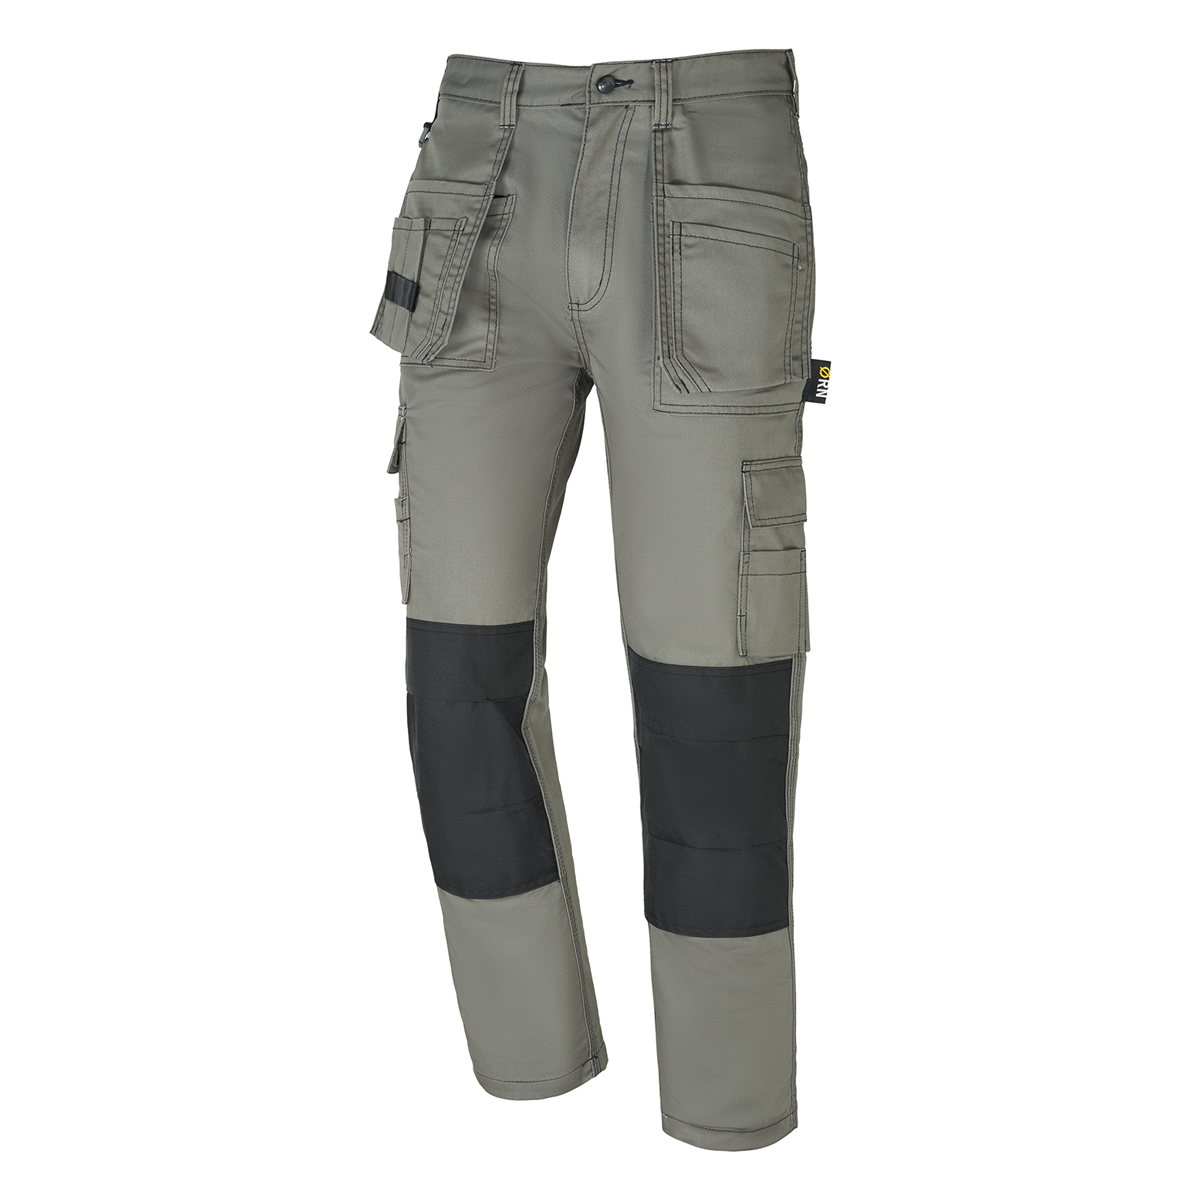 Swift tradesman trouser - 32r - anthracite - black